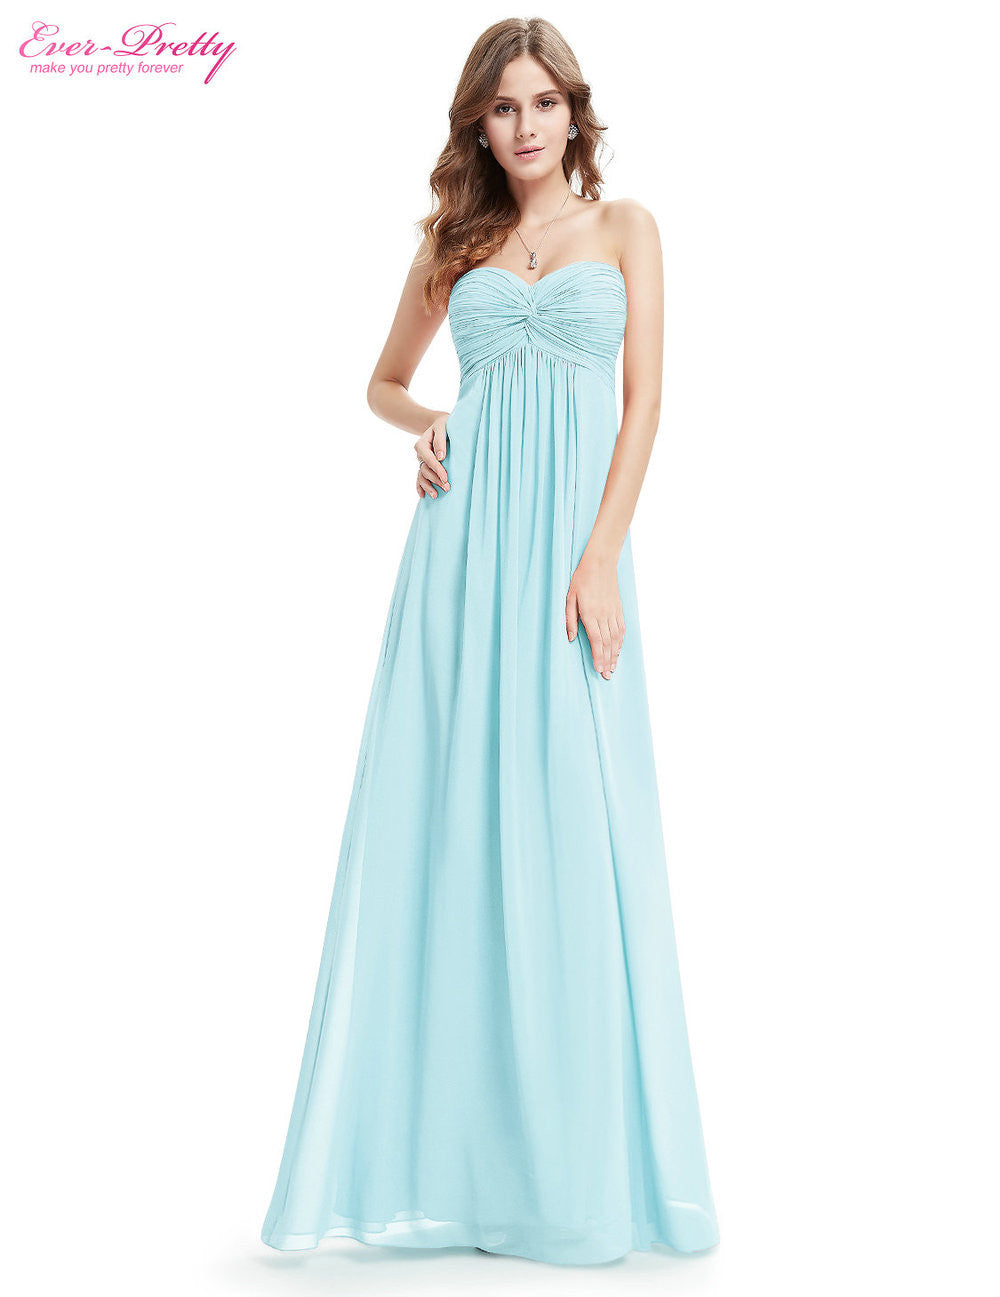 Chiffon Evening Dresses Ever Pretty HE08084 Strapless Elegant Light Blue Ruffled Long Chiffon Dresses 2016